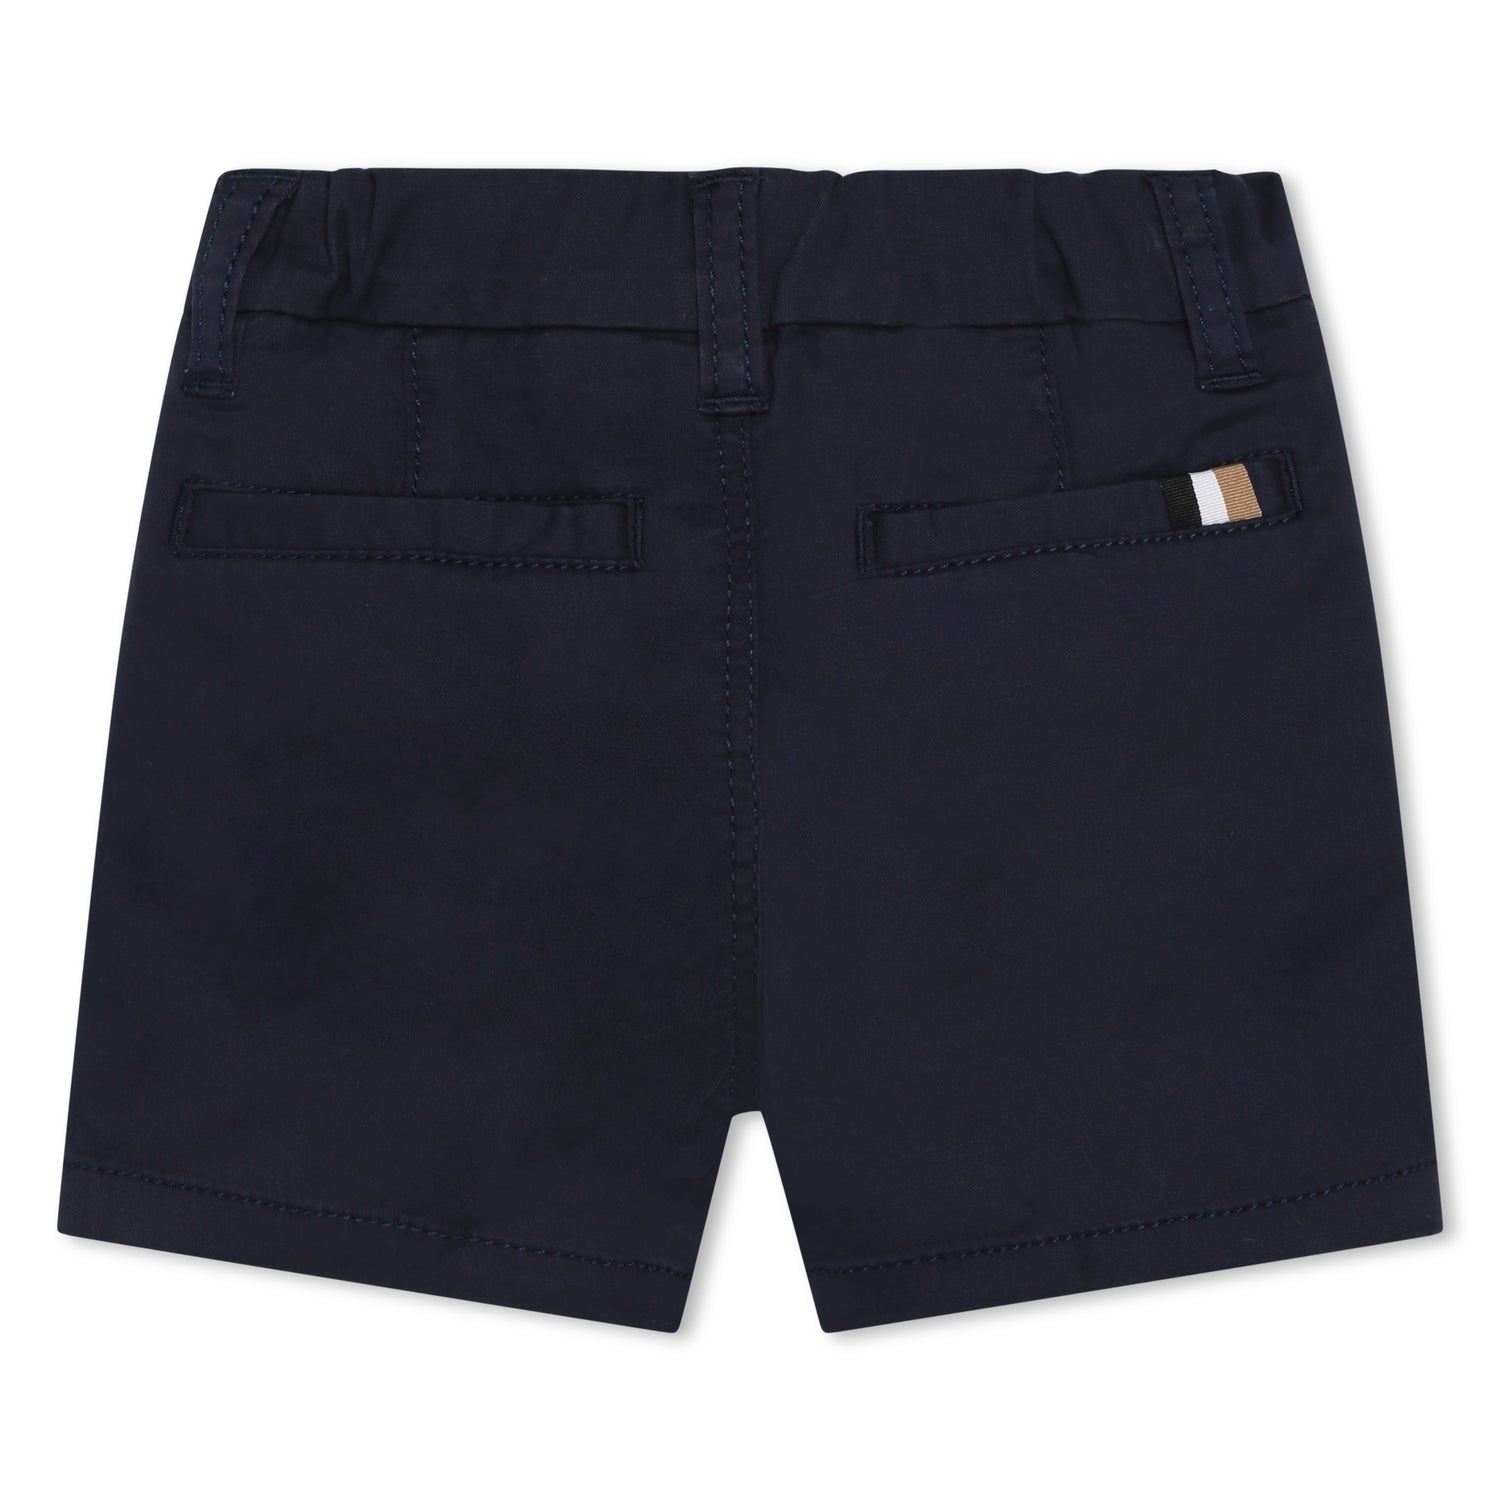 Hugo Boss Bermuda Shorts Style: J04464